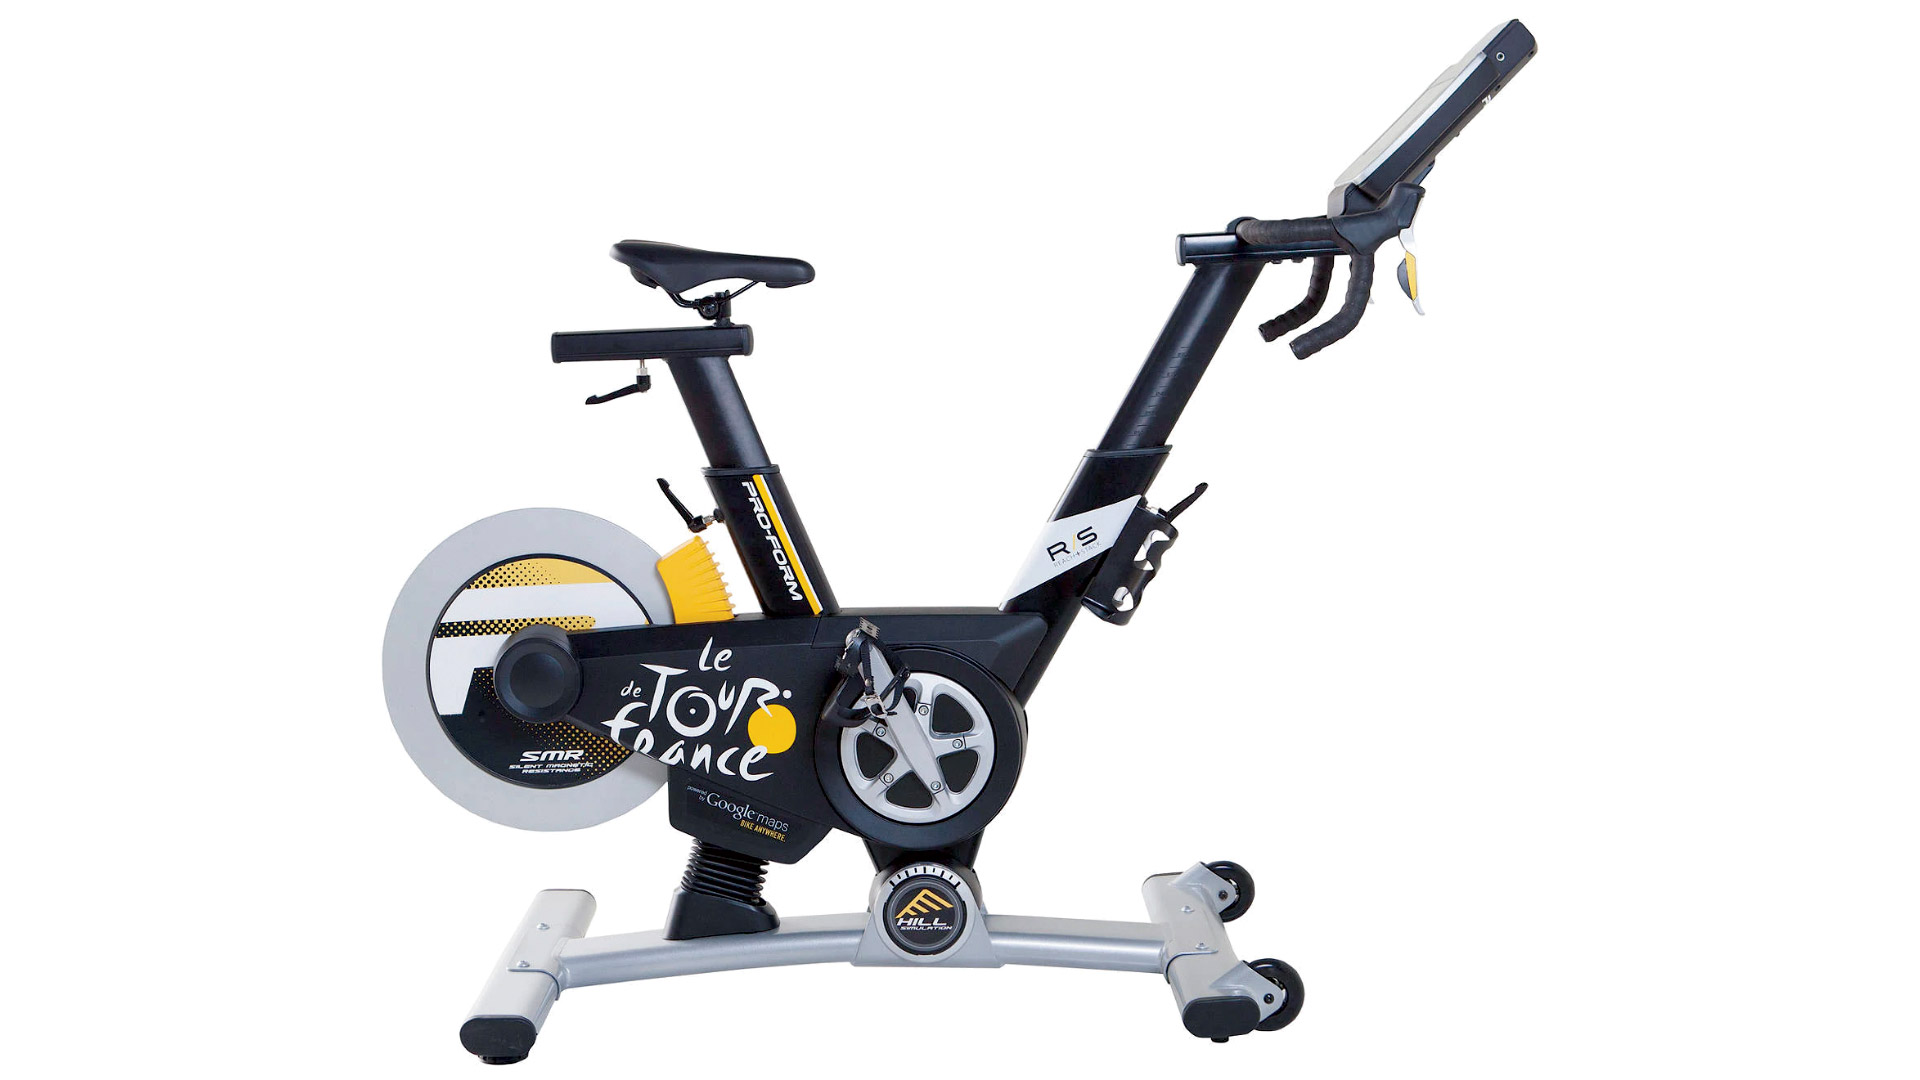 proform tour de france 1.0 indoor trainer exercise bike